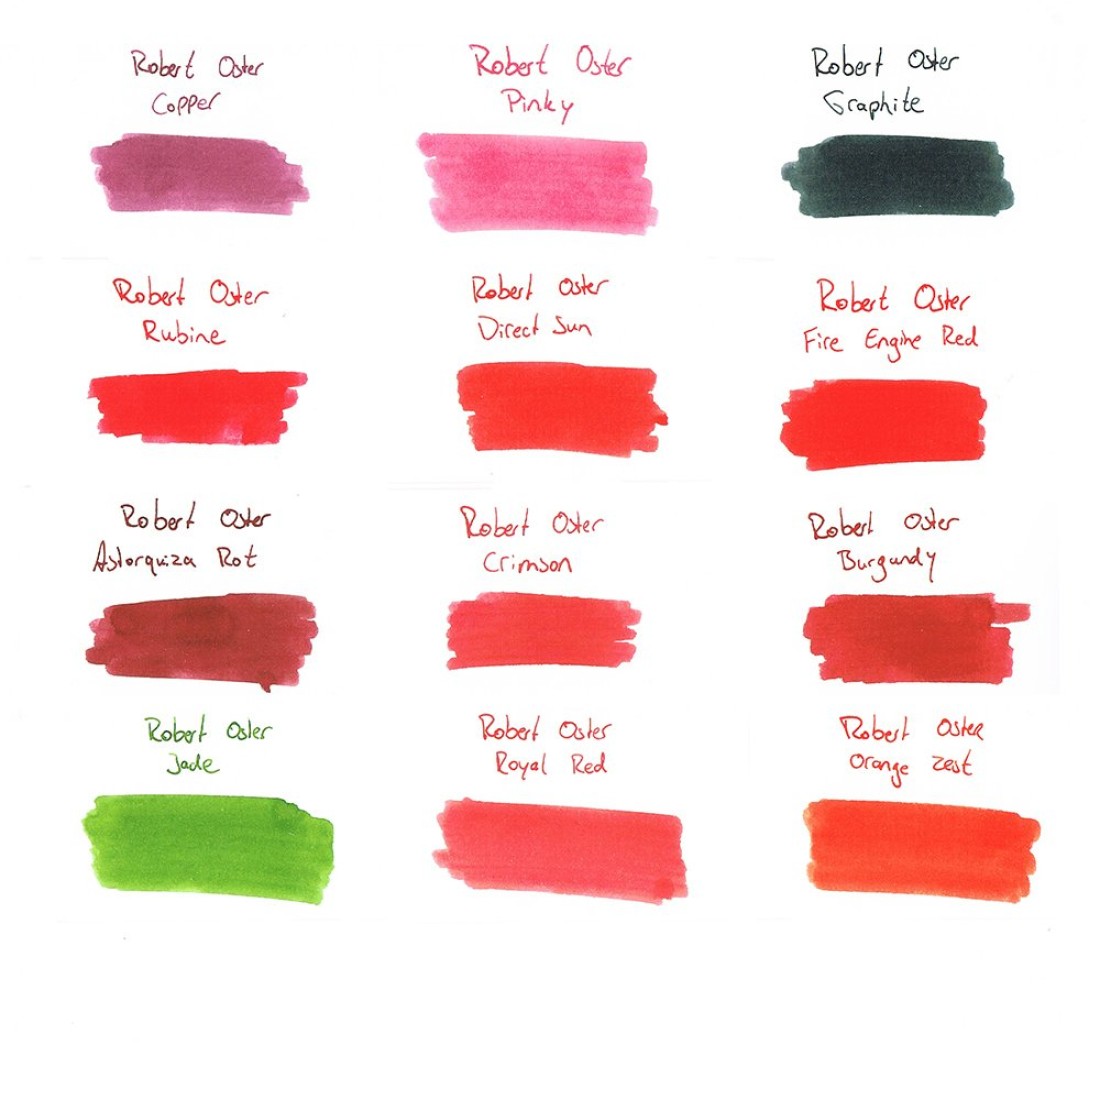 Robert Oster Signature Ink - Ink Bottles (92 colors)